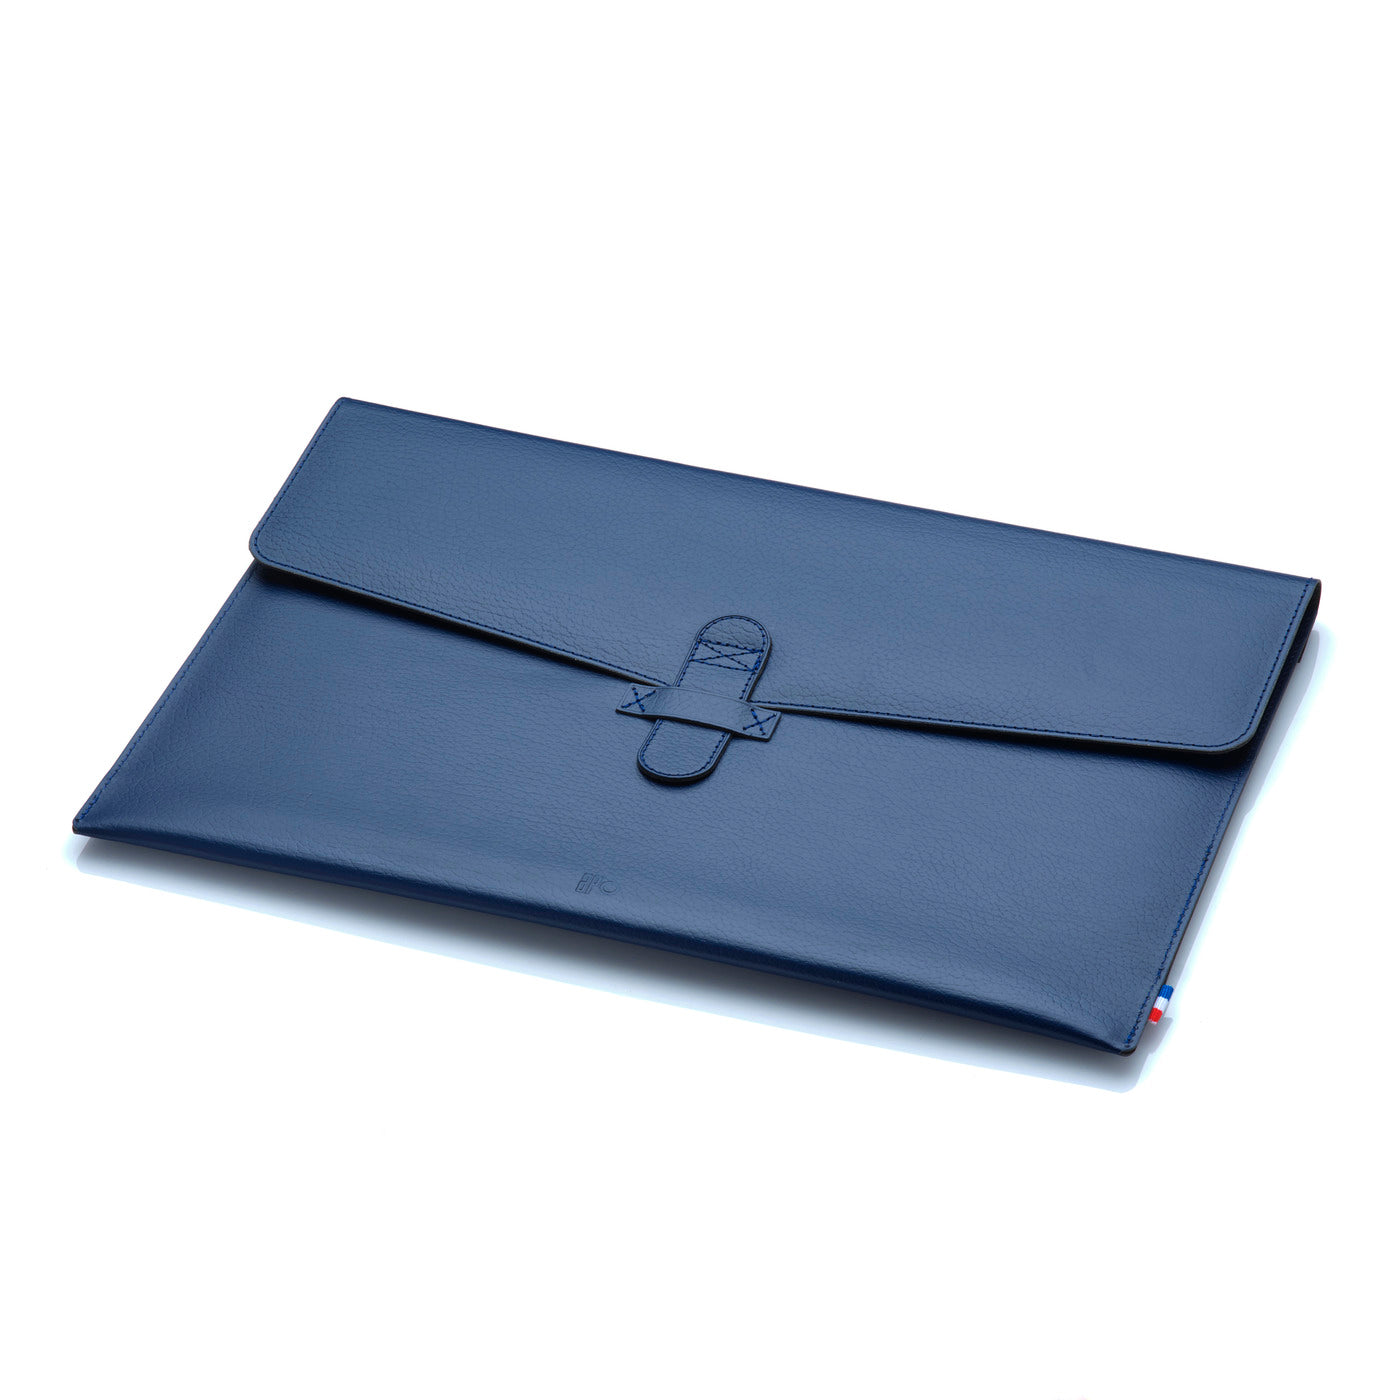 NAT - Housse MacBook Pro 13 / Air 13 en cuir recyclé - Bleu